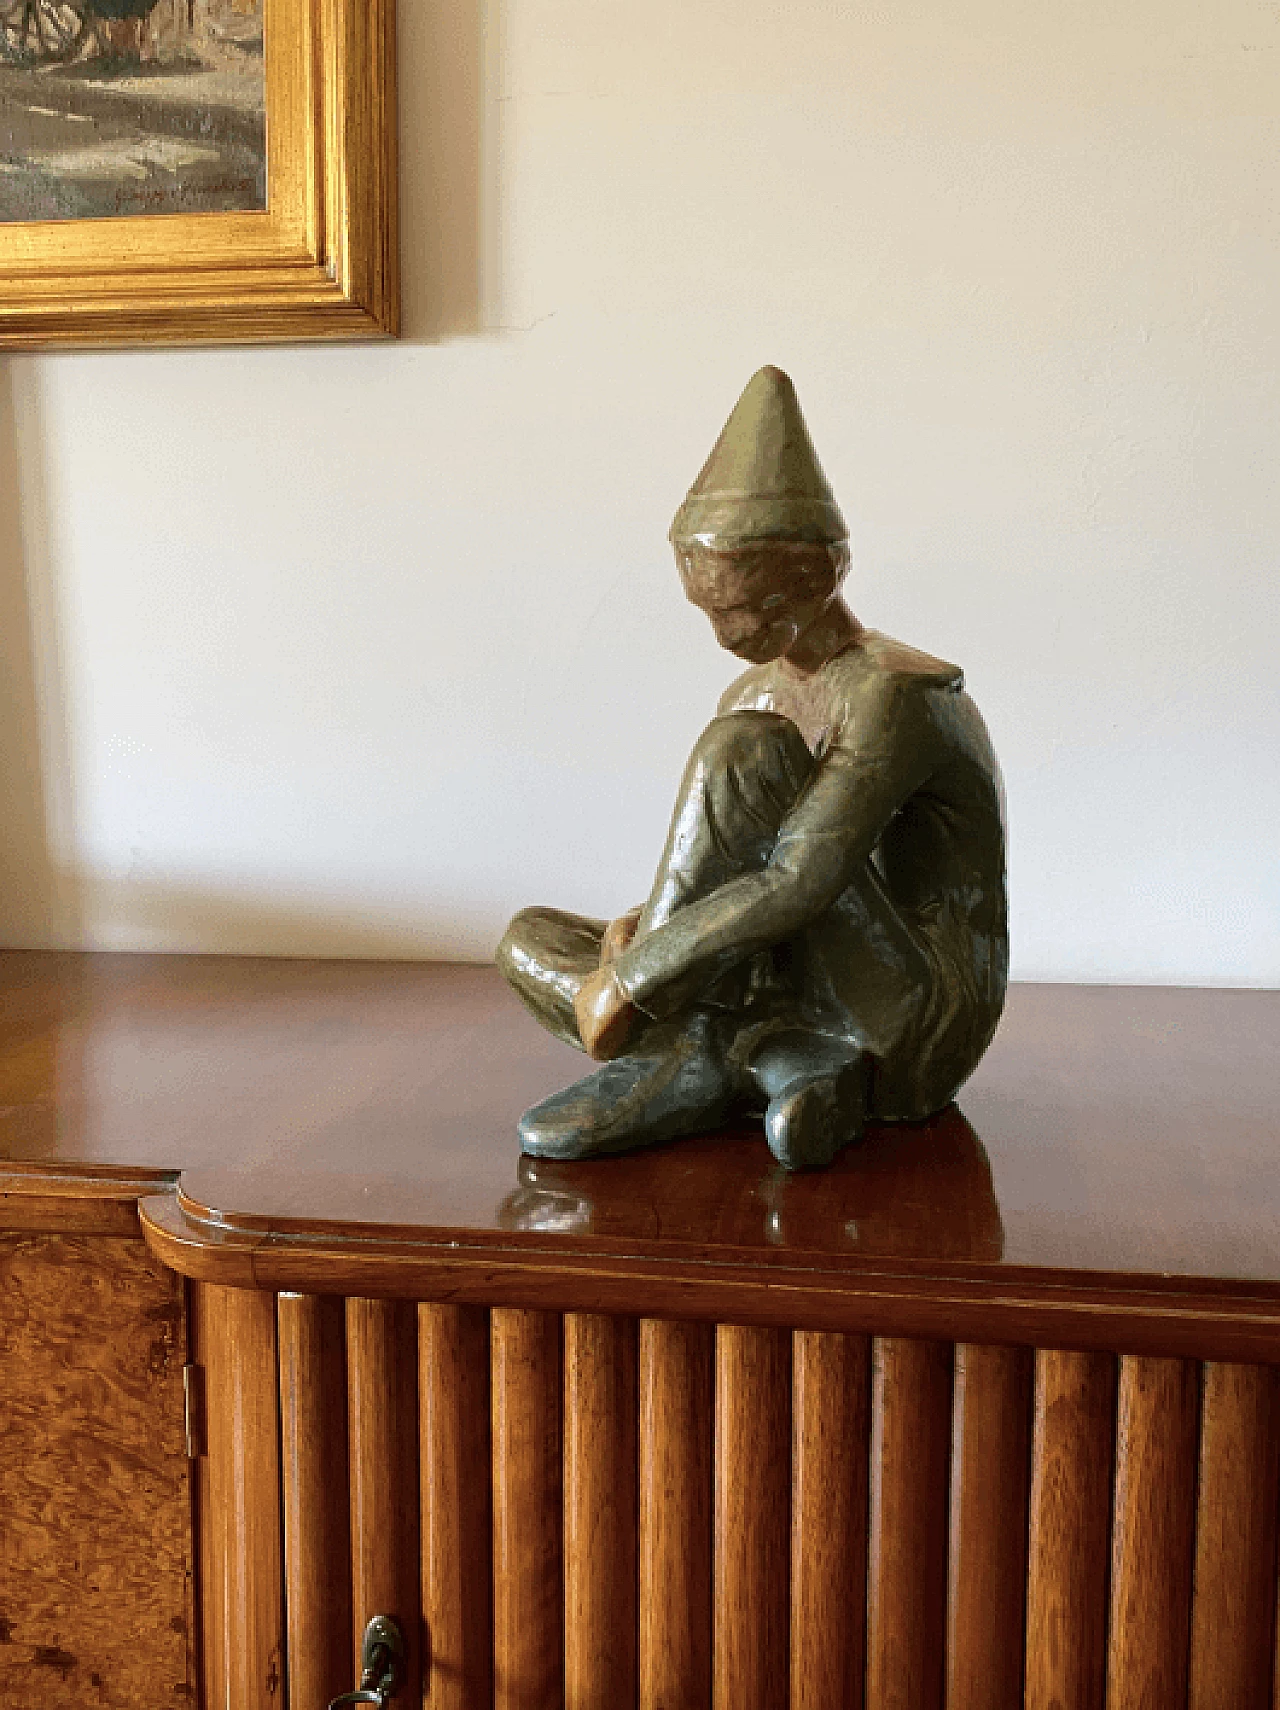 Giordano Tronconi, Seated boy, green ceramic figure from Faenza, 1950s 53